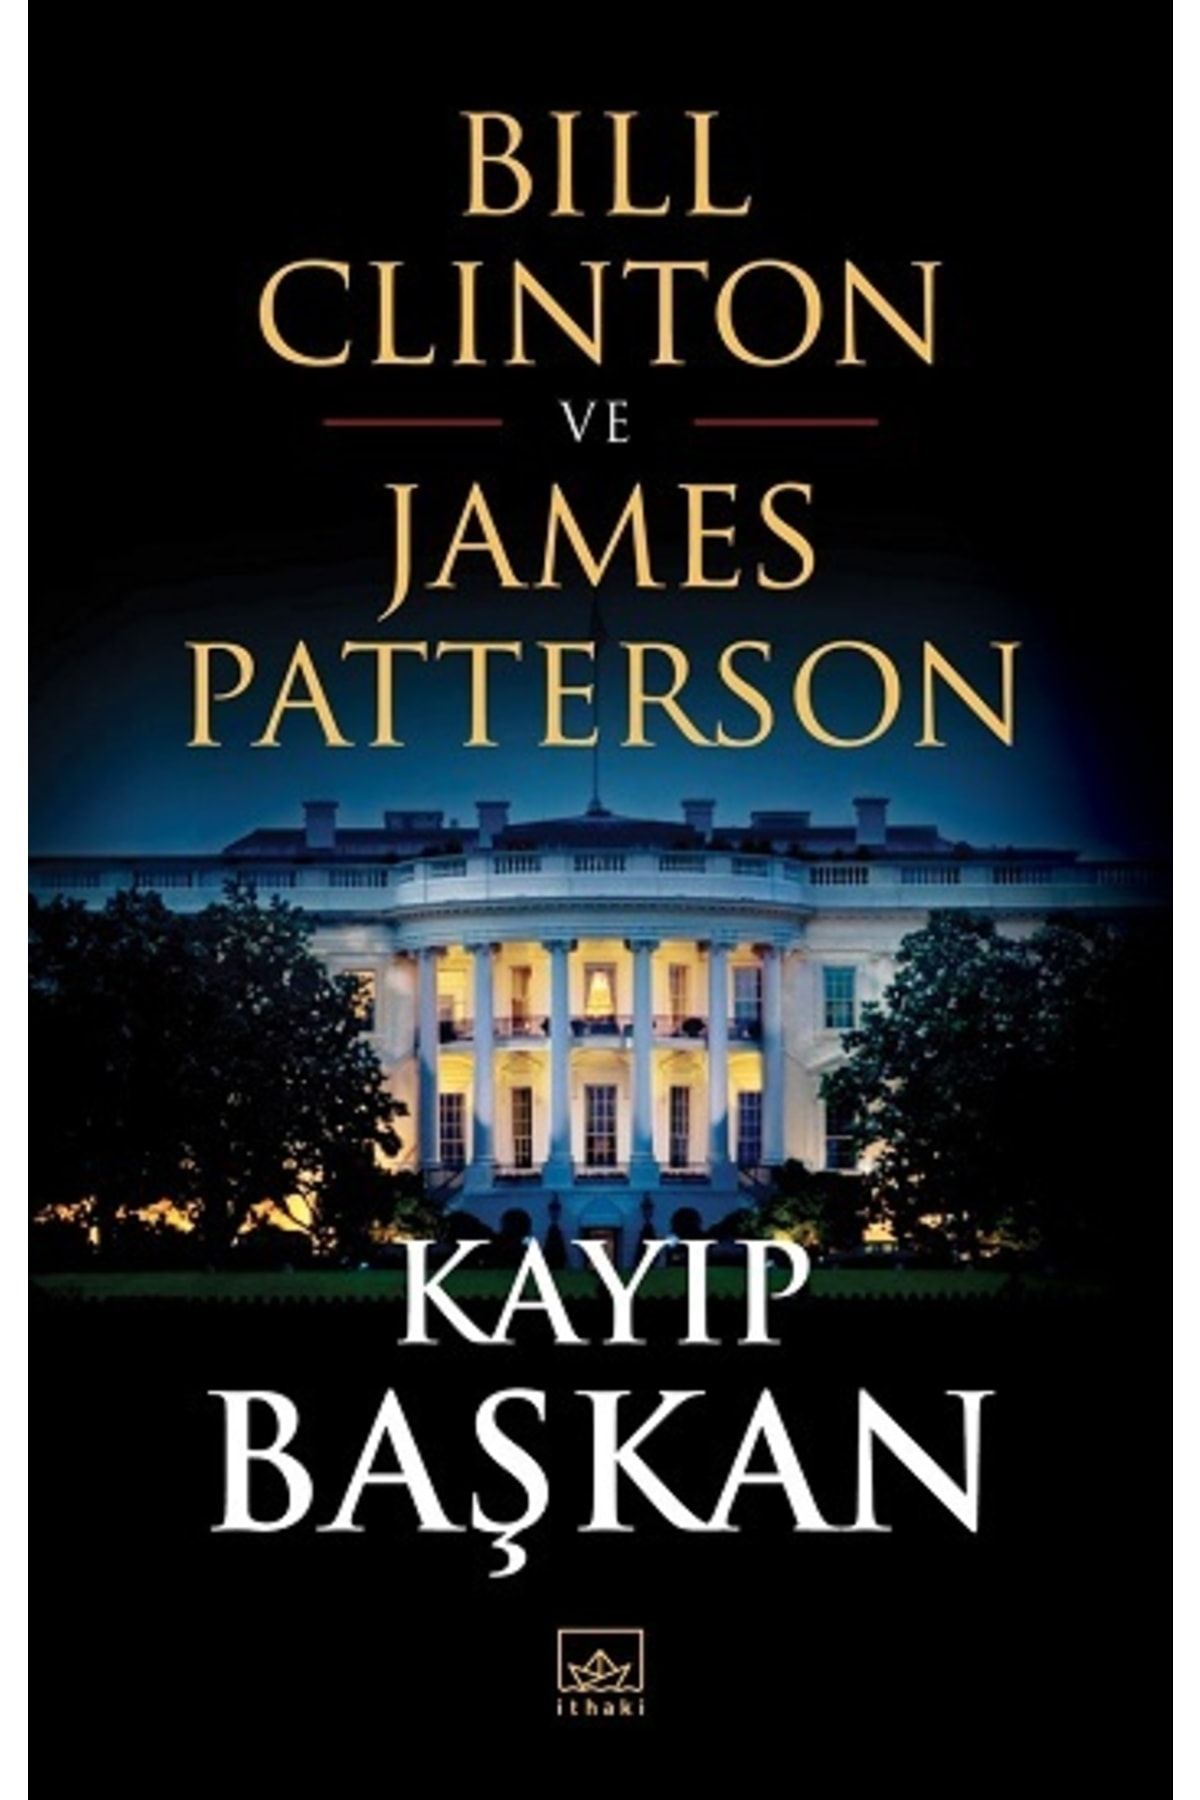 İthaki Yayınları Kayıp Başkan - - Bill Clinton & James Patterson Kitabı